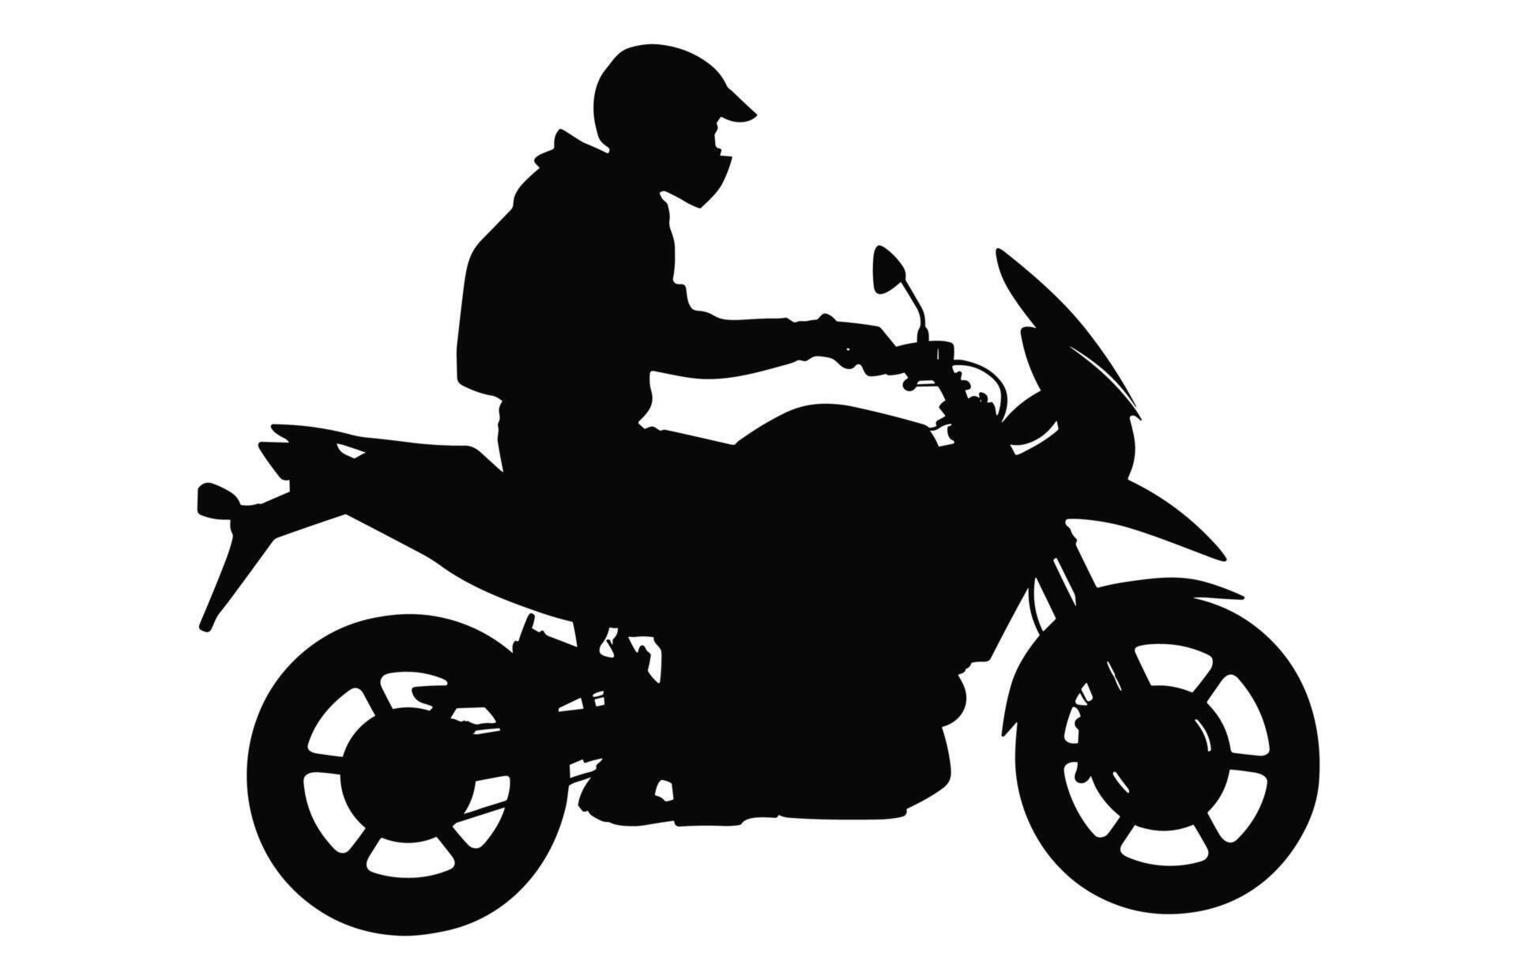 hombre montando motocicleta silueta vector negro y blanco aislado en un blanco antecedentes